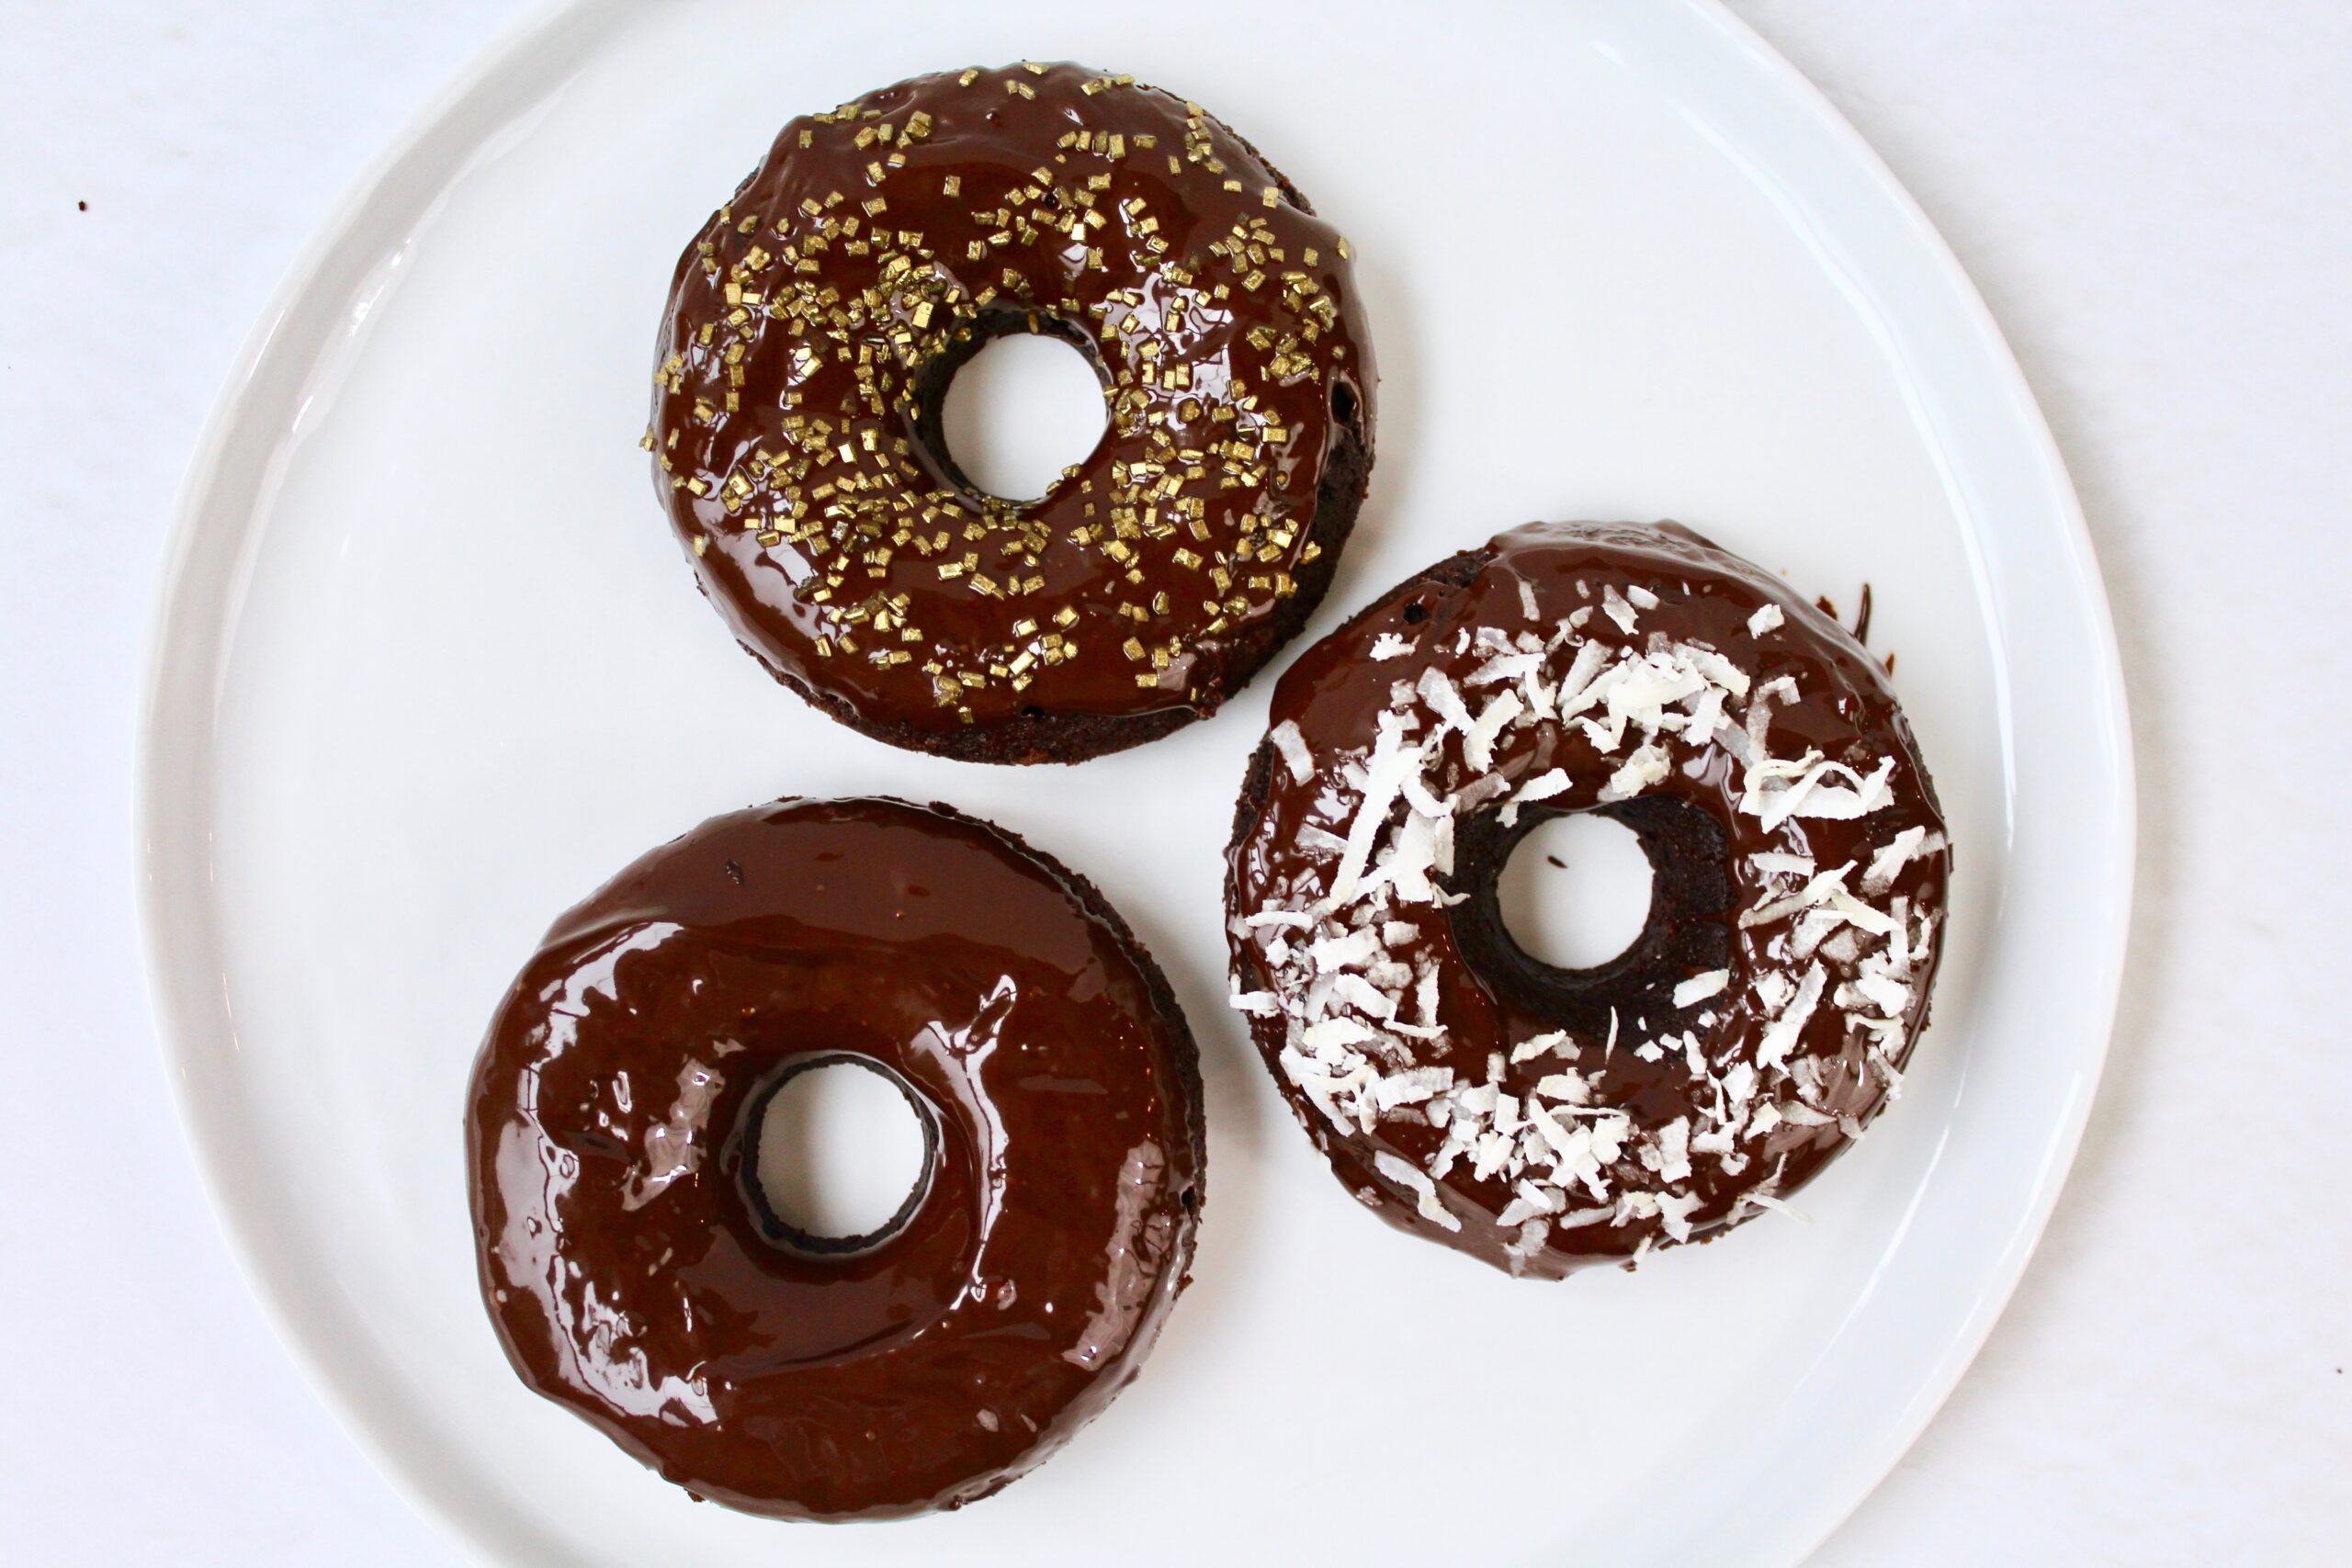 Chocolate Donuts with Chocolate Ganache Glaze (vegan, gluten-free, refined sugar free)